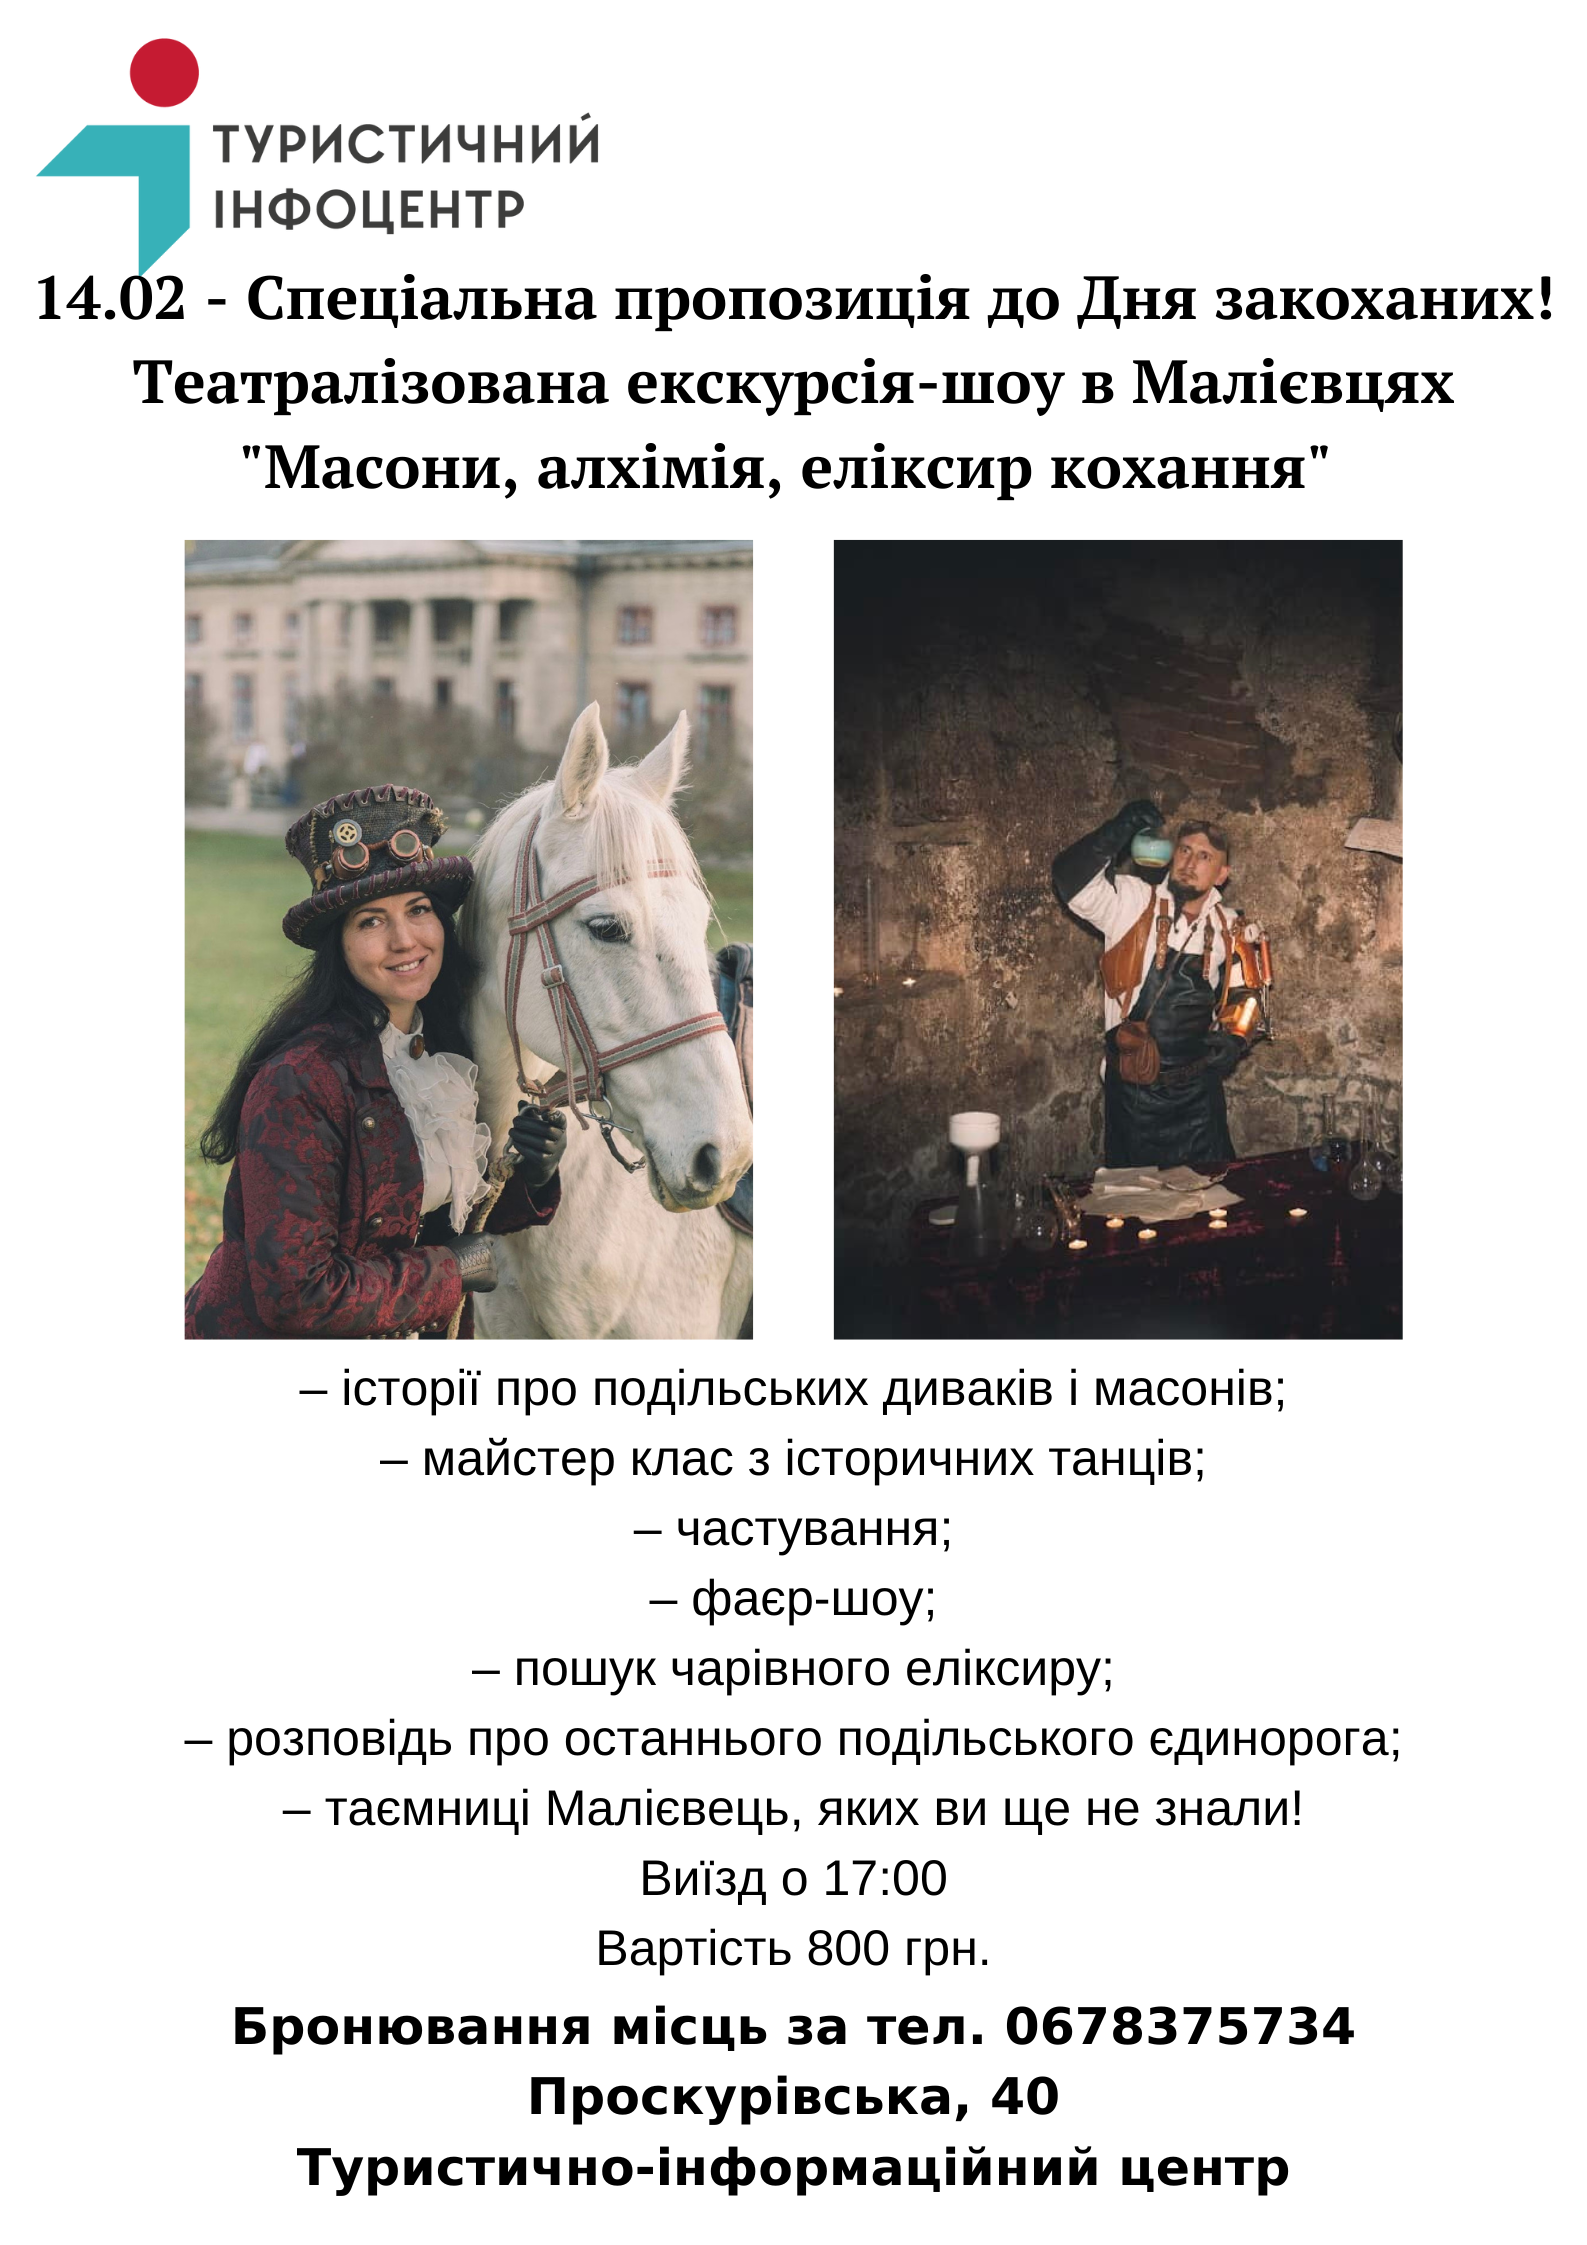 Театралізована екскурсія «Масони, алхімія, еліксир кохання» в Малієвцях